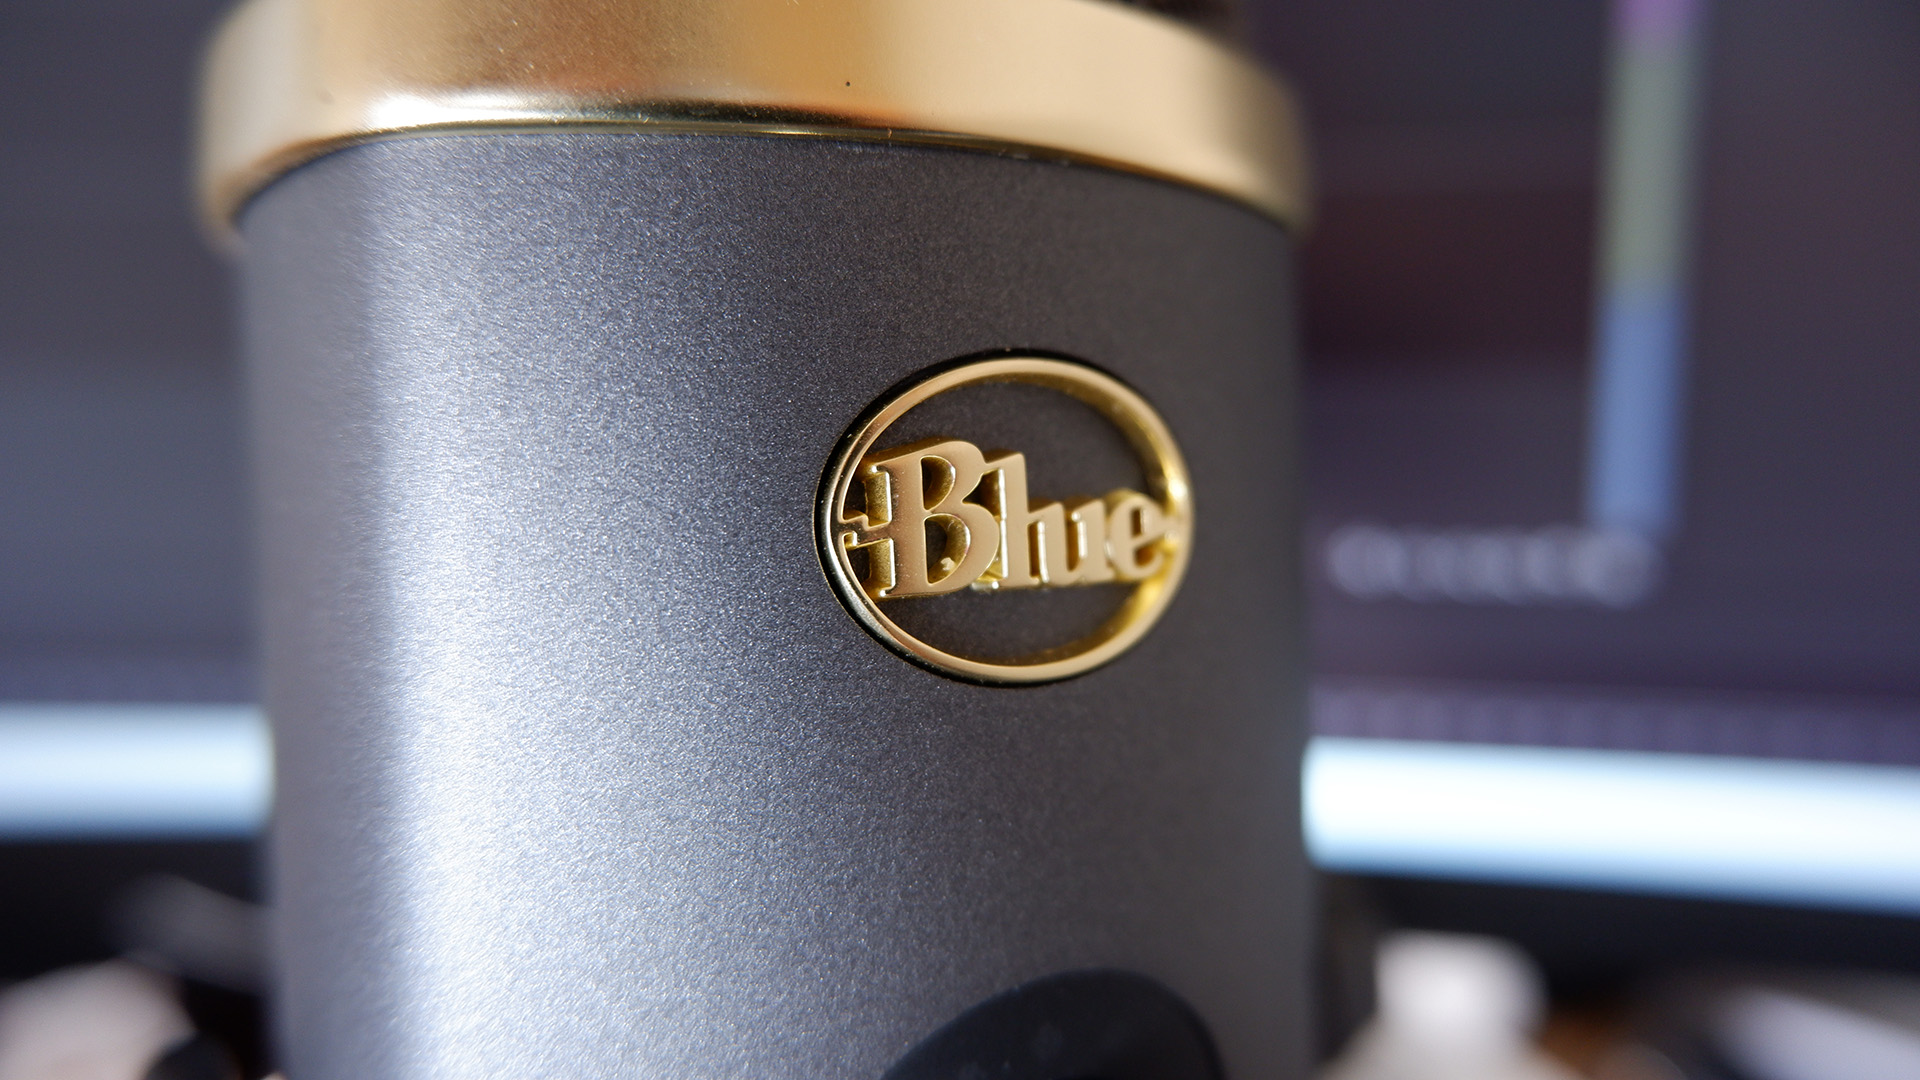 Blue Yeti X WoW Edition microphone on a desk.